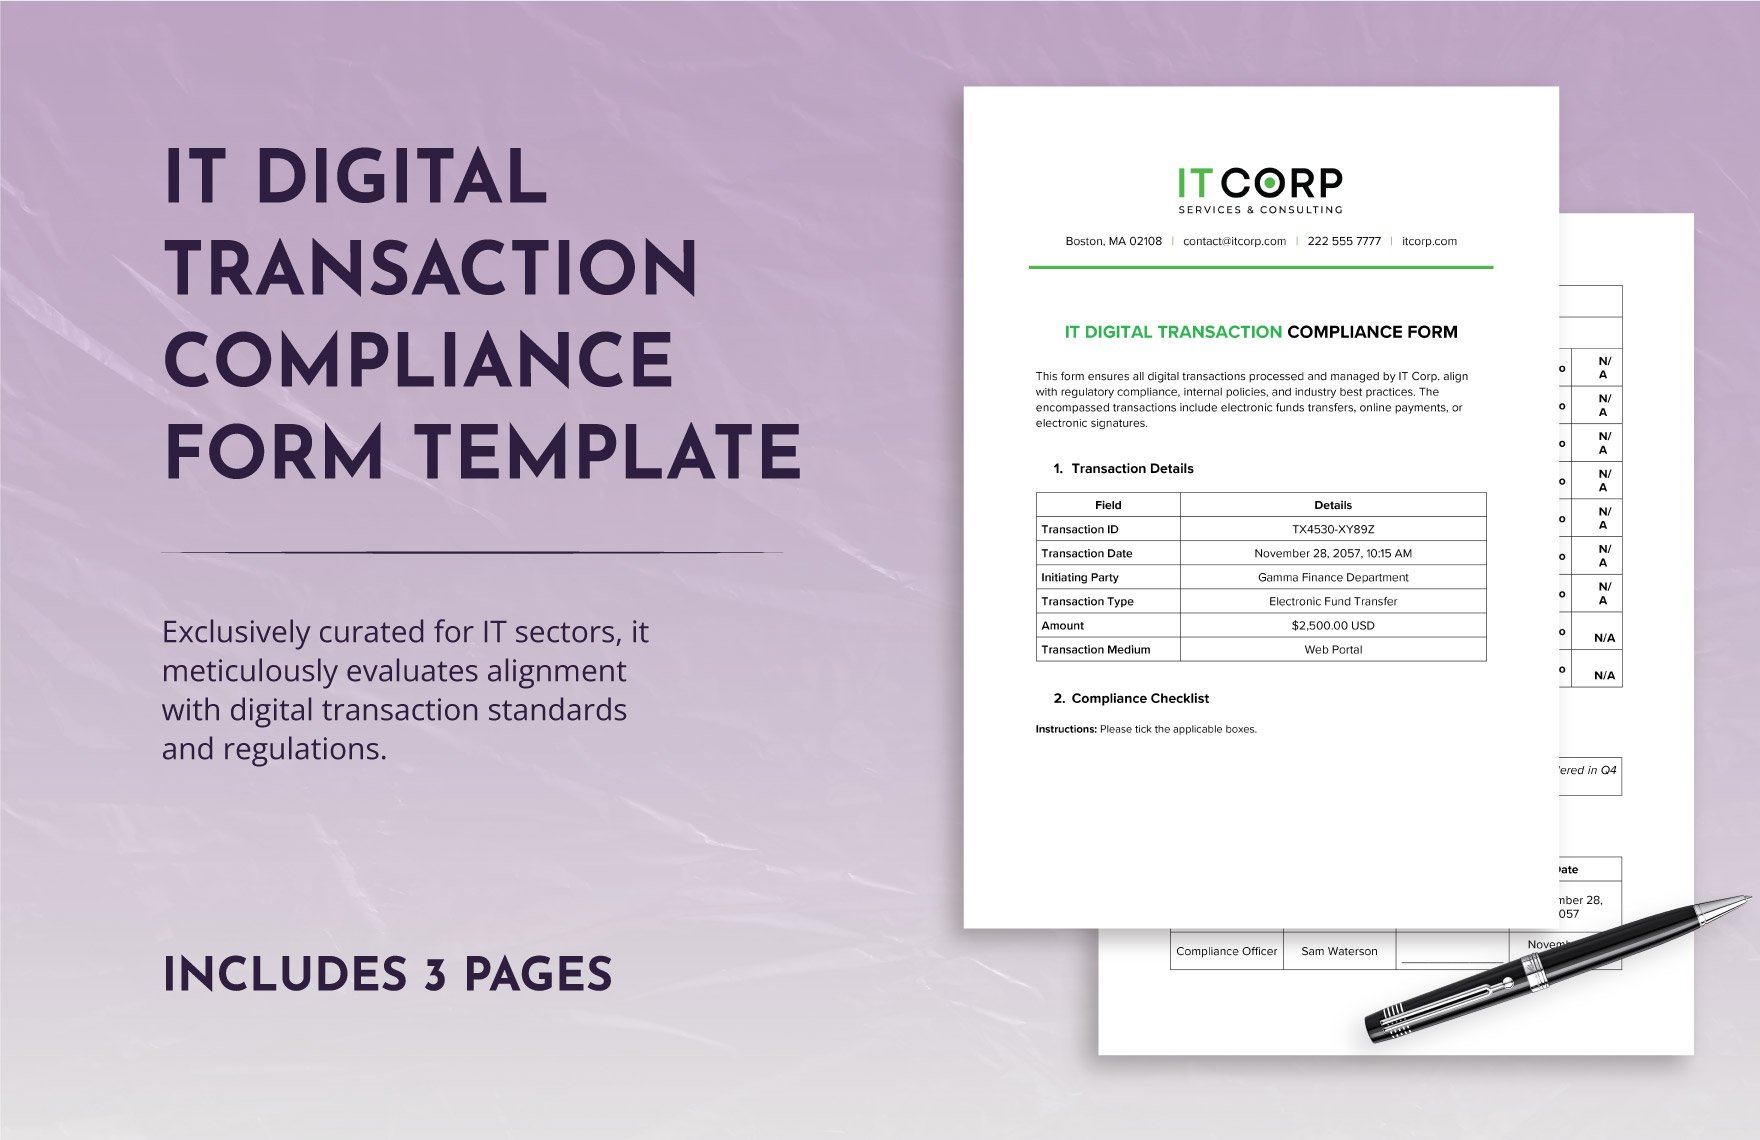 IT Digital Transaction Compliance Form Template in Word, Google Docs, PDF